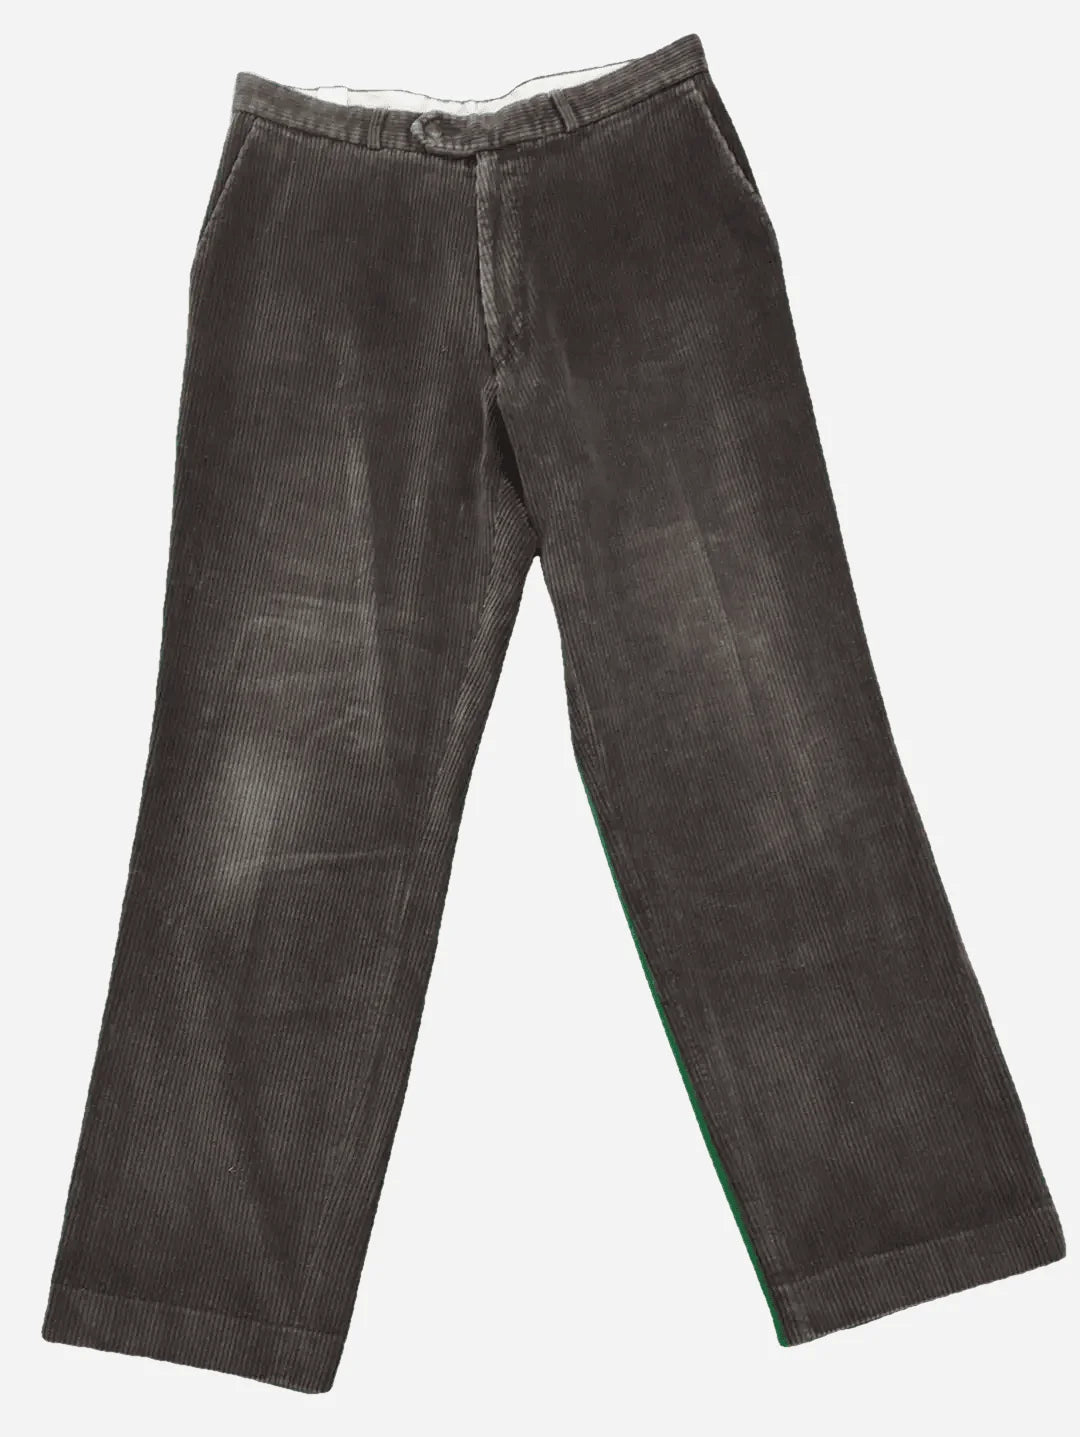 West Rock corduroy trousers 34/32 (L)